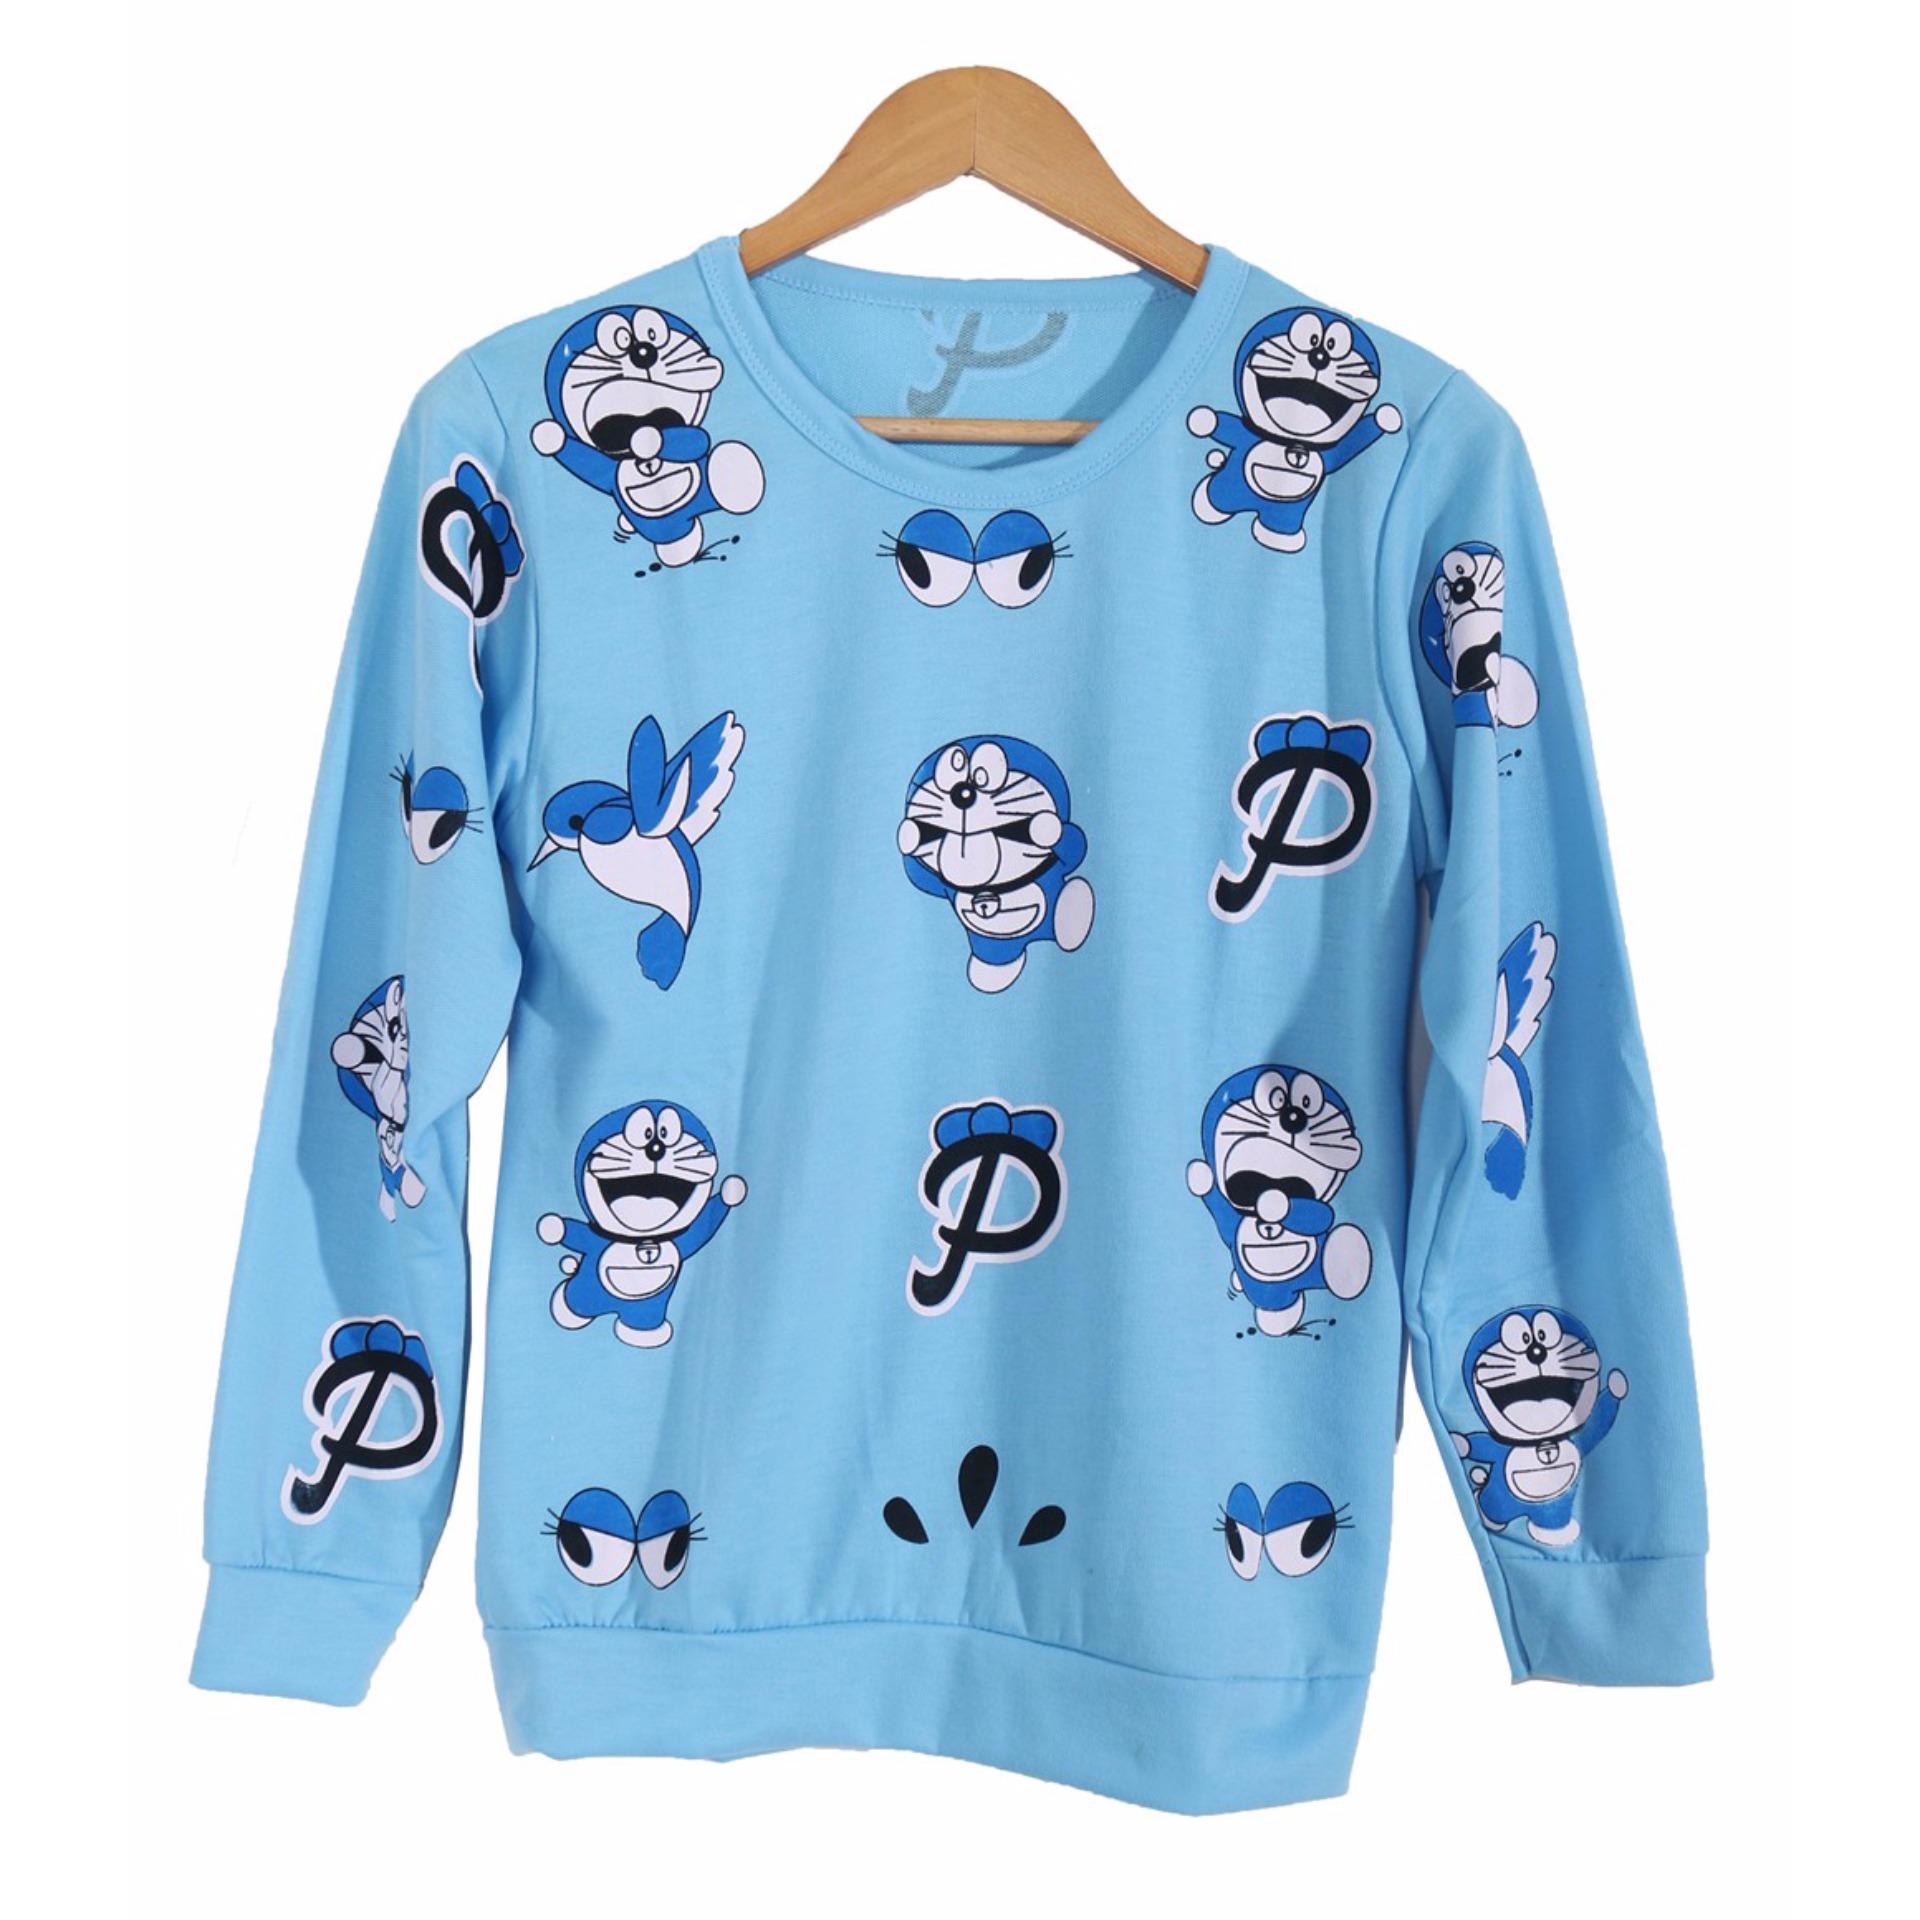 Cikitashop Kaos Cewe / Kaos Tumblr Tee Wanita / Kaos T-Shirt Wanita / Kaos Wanita Fashion / Atasan Wanita / Sweater jaket Doraemon 1 - Blue